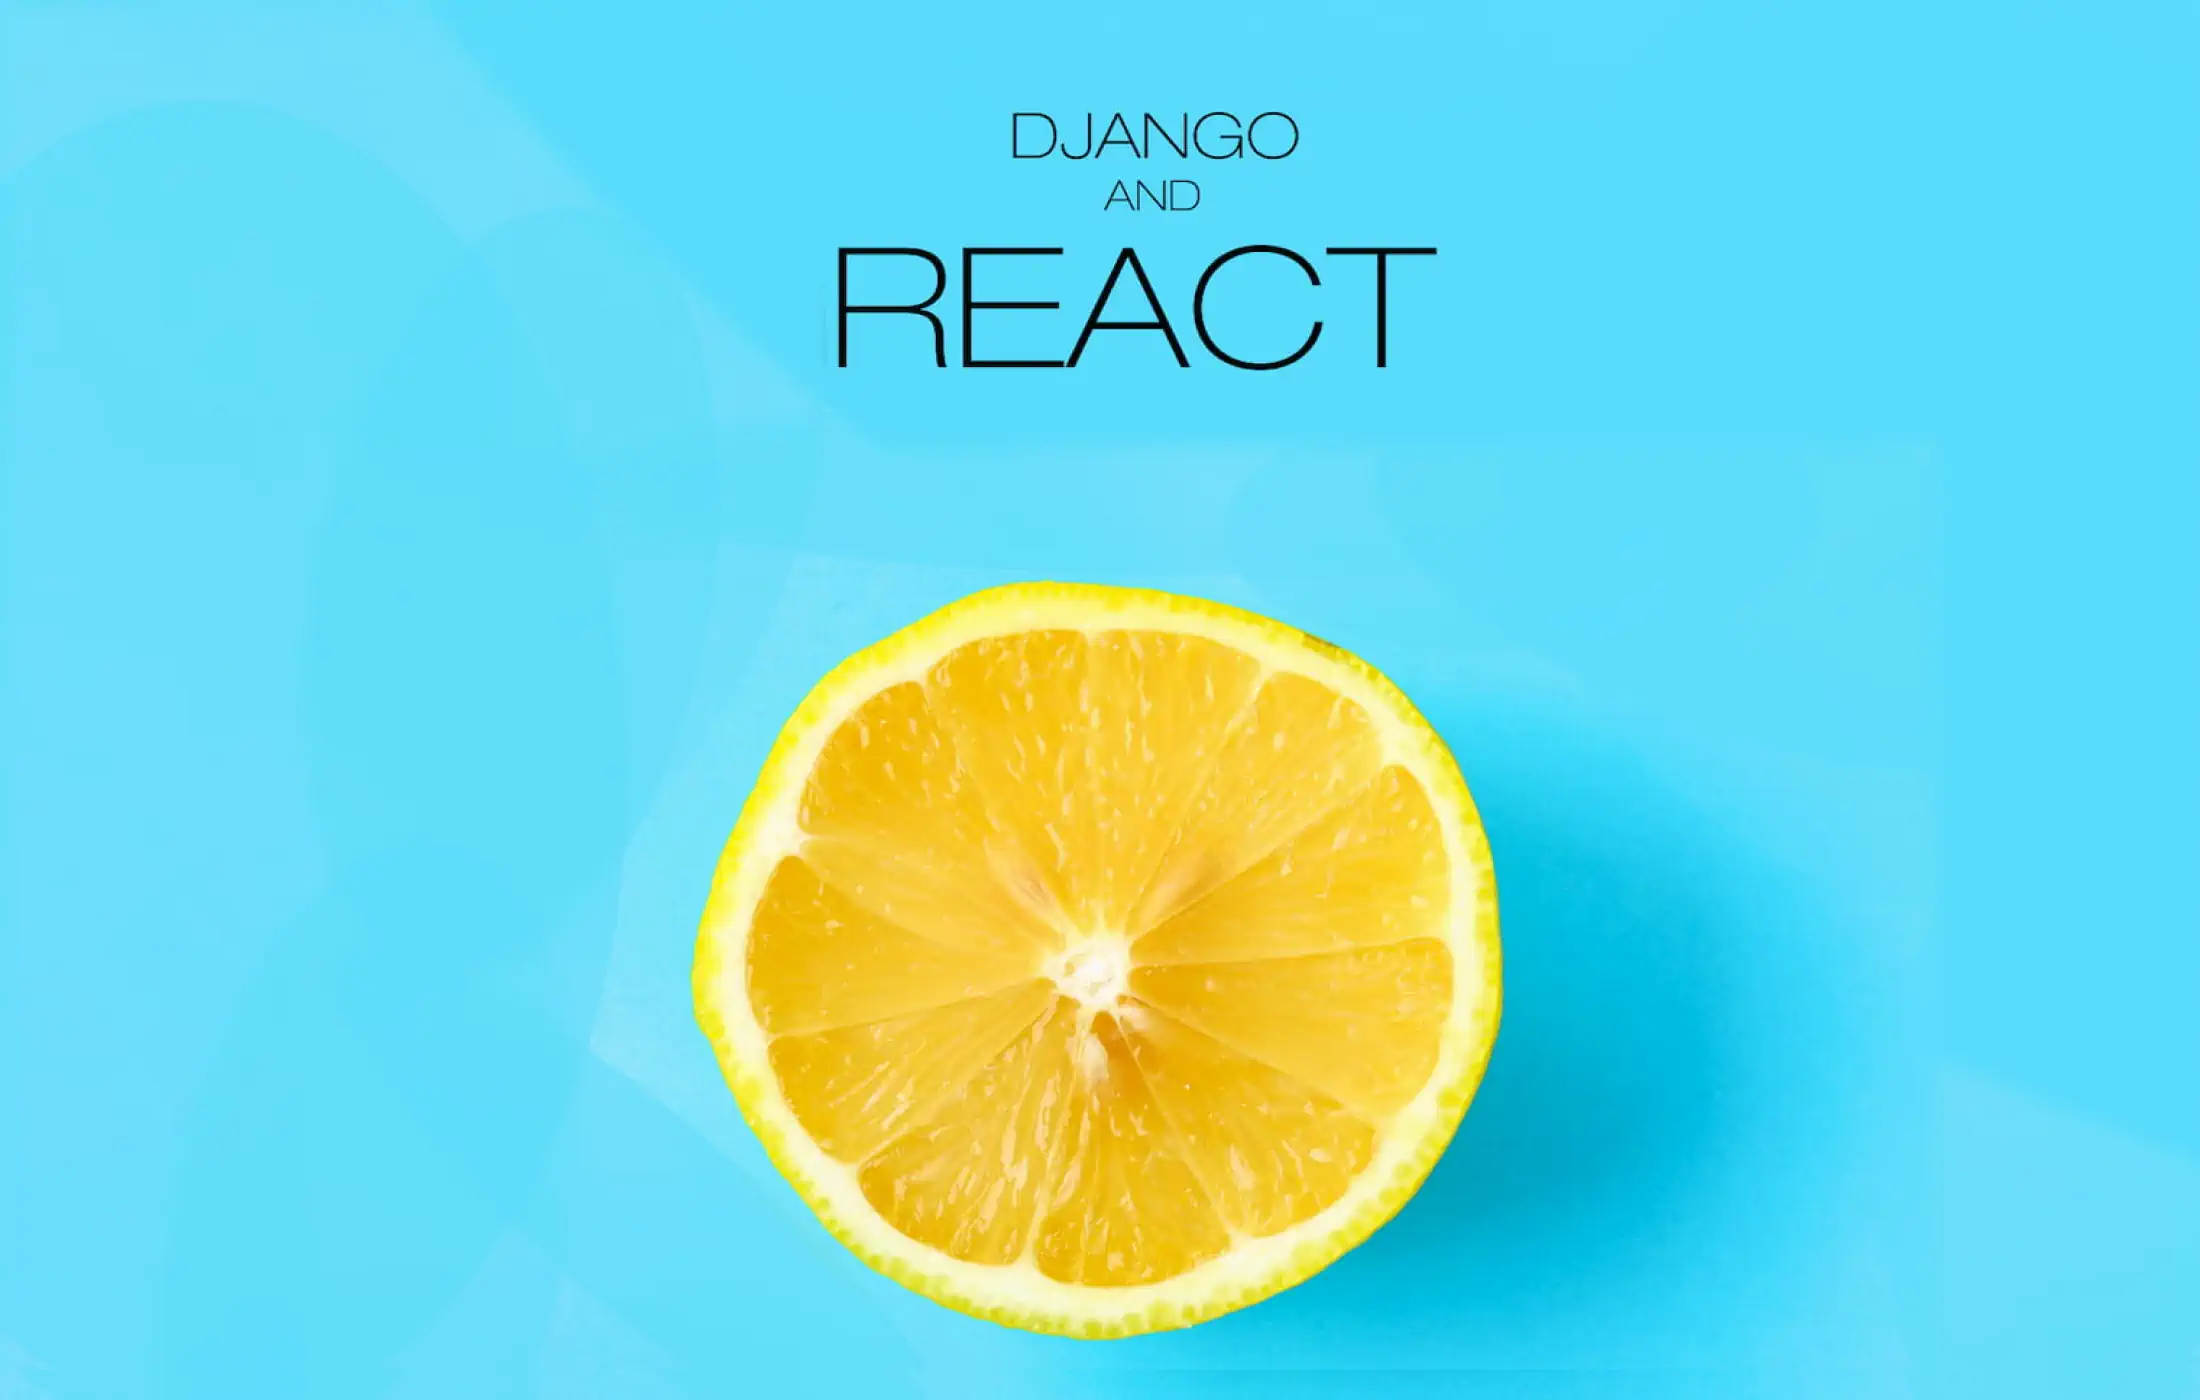 Option I: Django and React